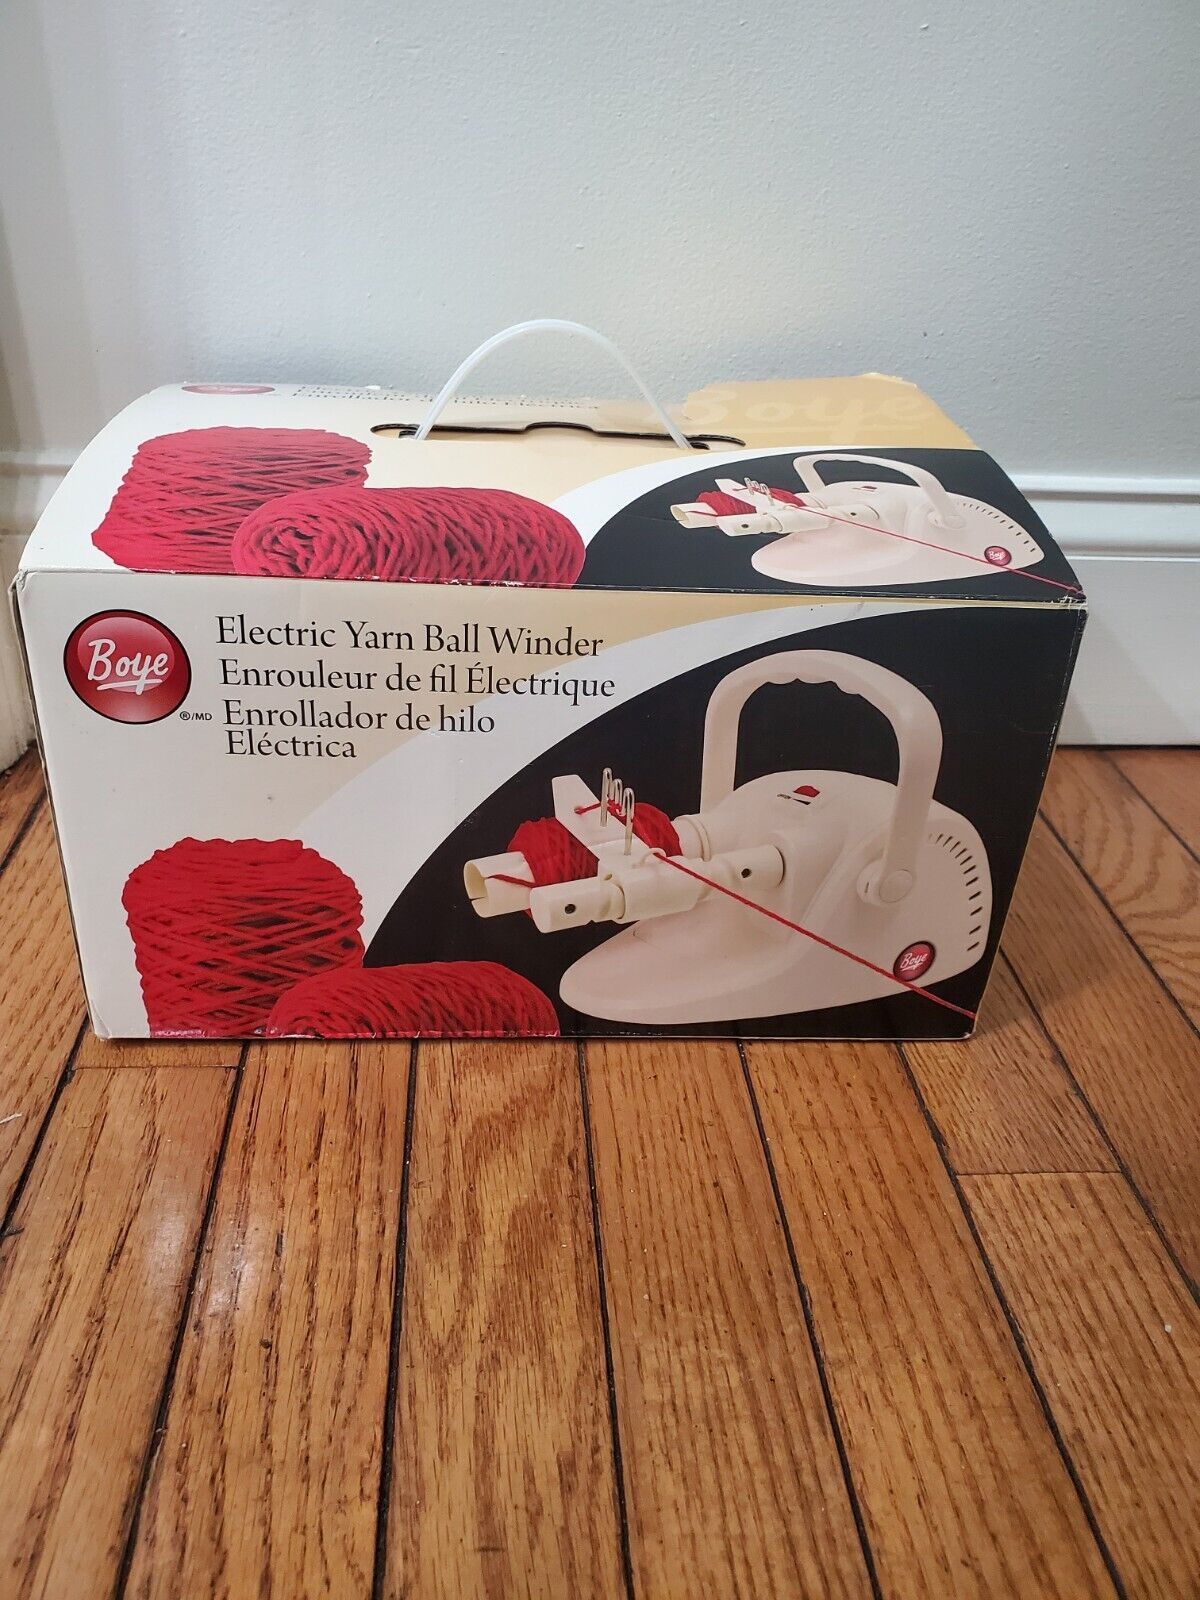 BOYE Electric Yarn Ball Winder by Simplicity-Model 3701001030 NEW OPEN BOX